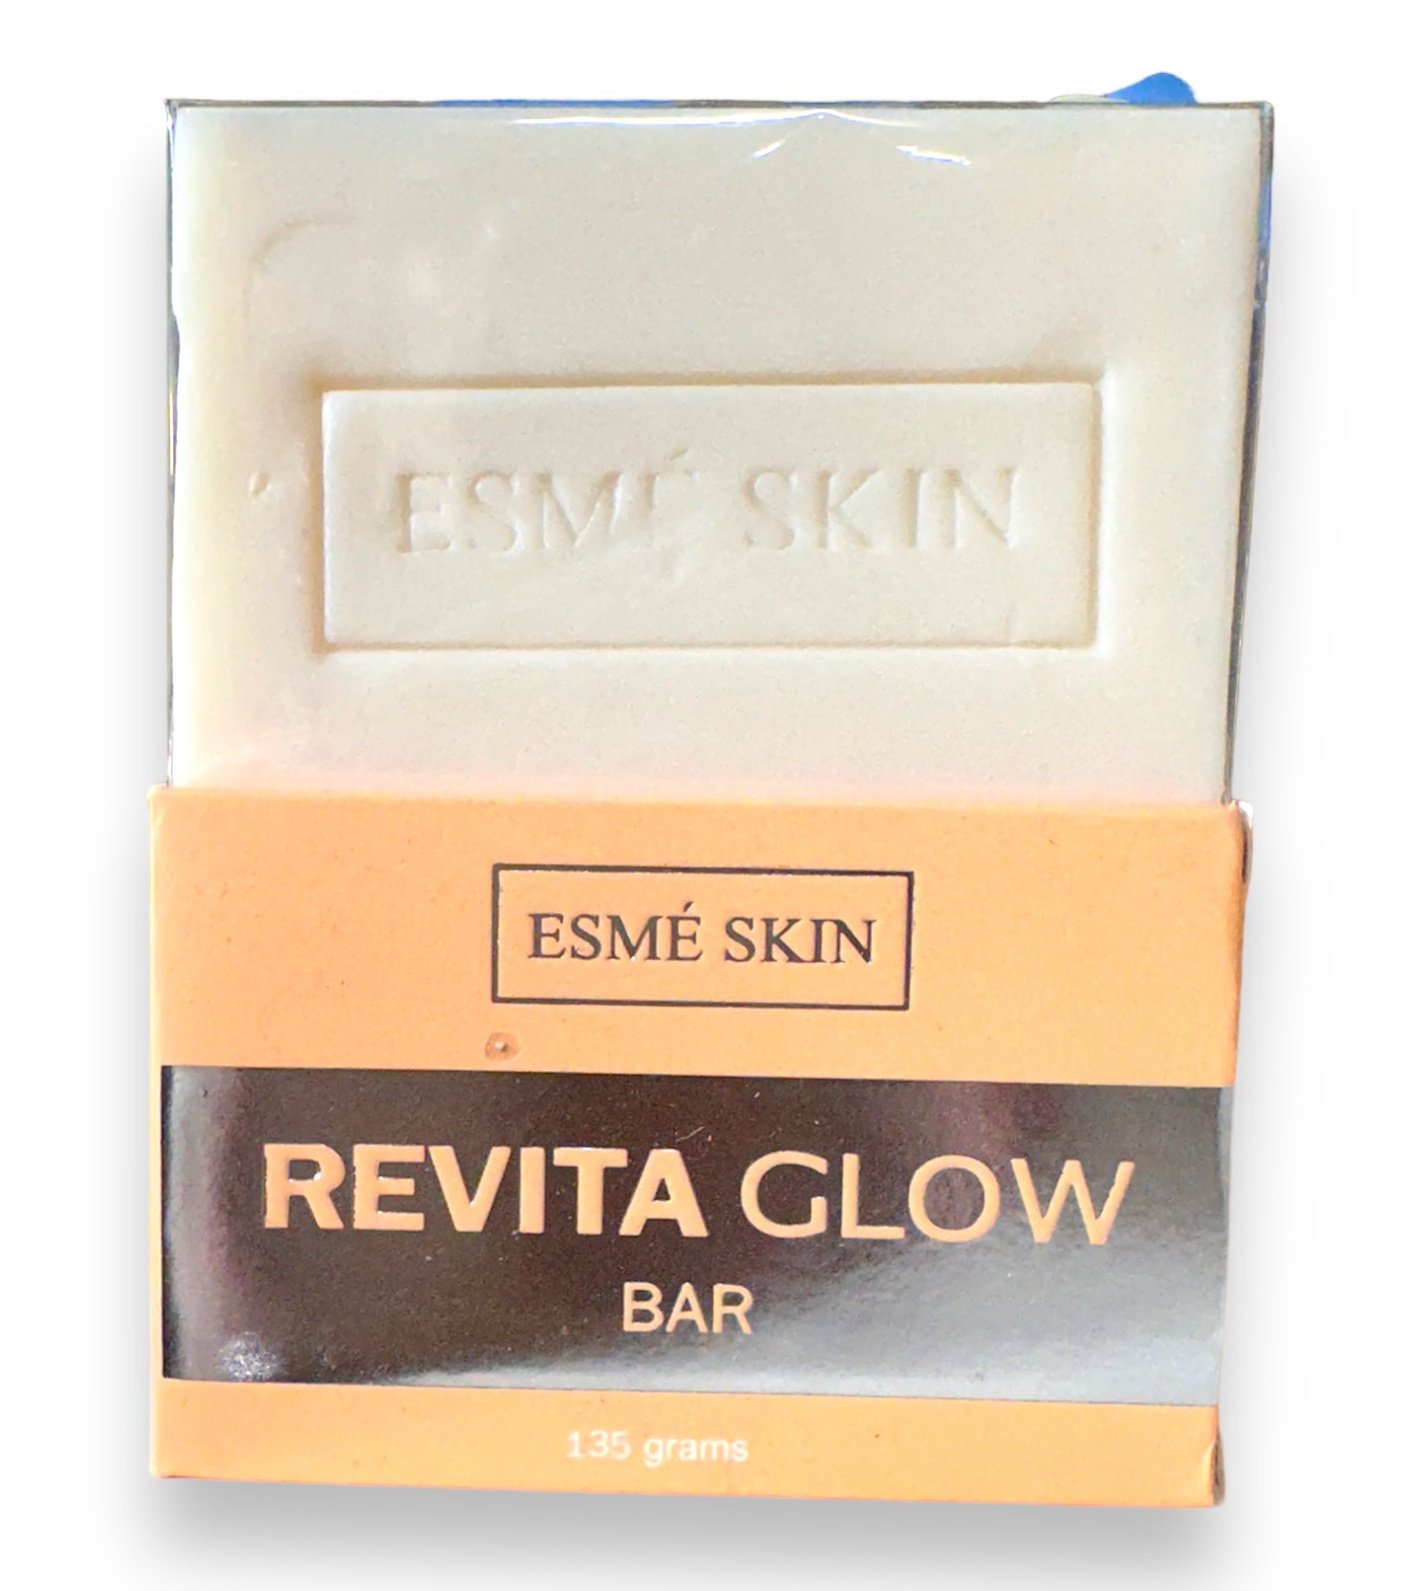 Esme skin Revita Glow Bar